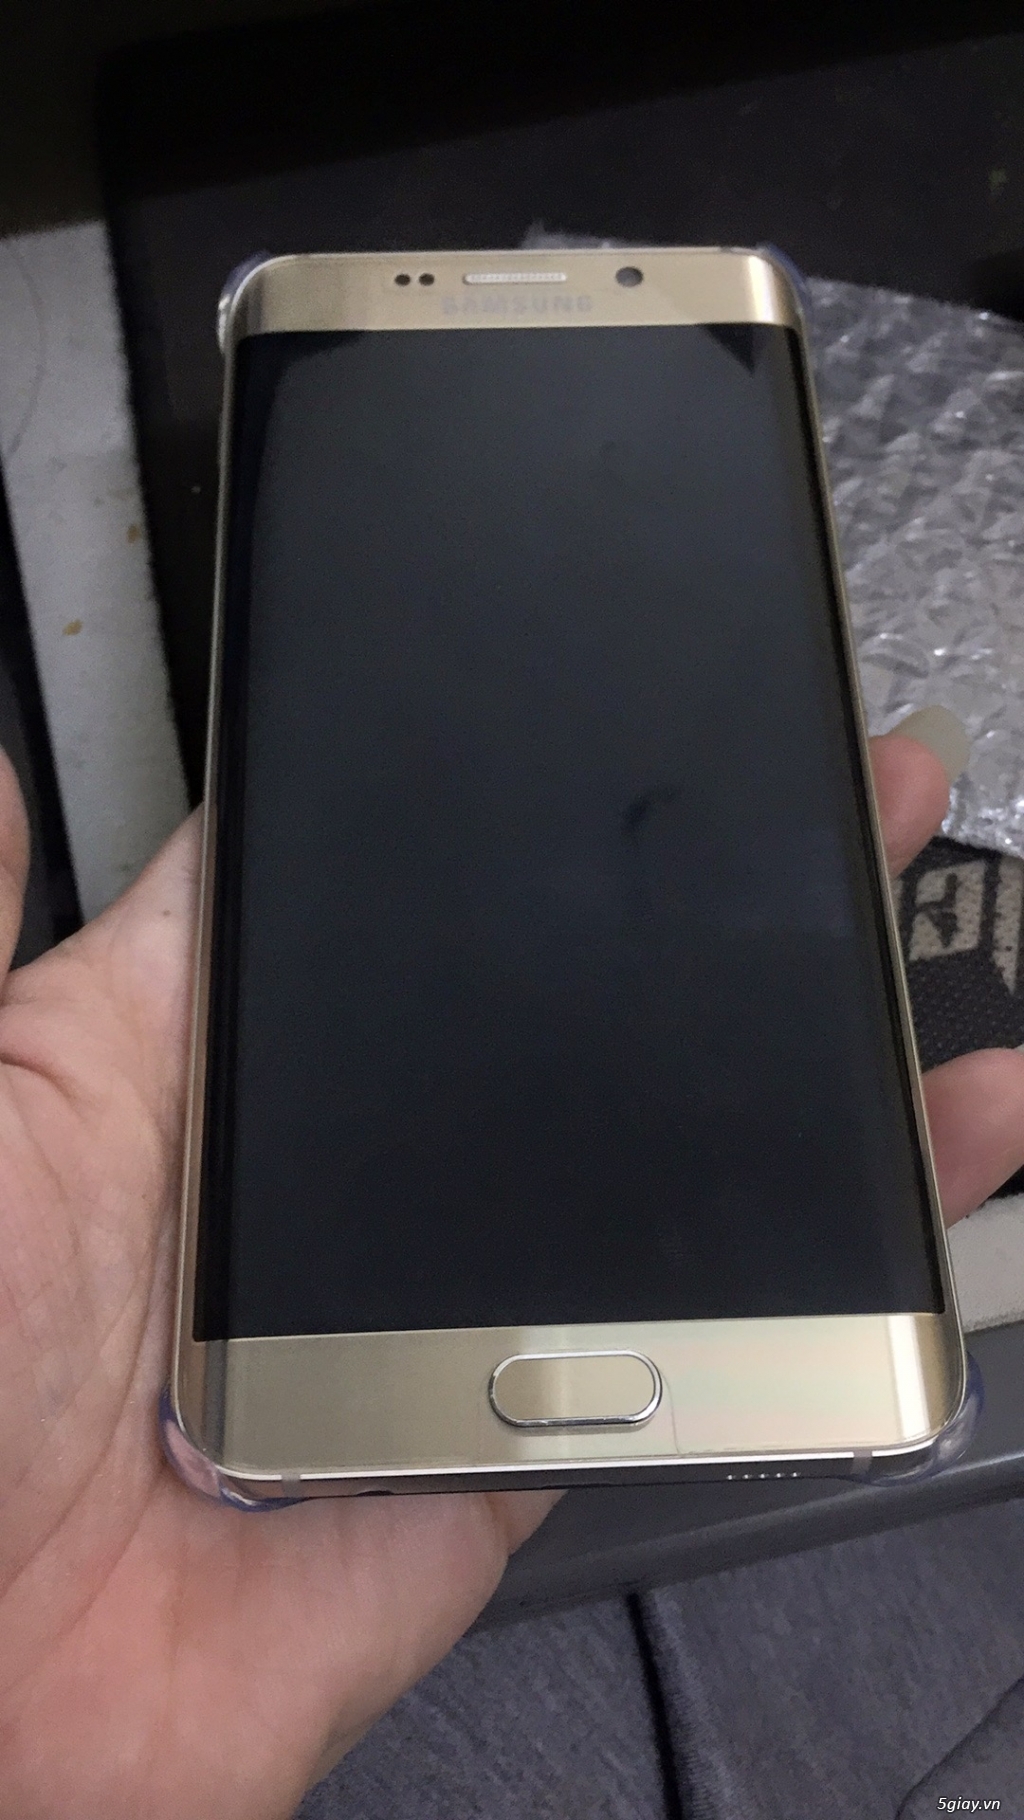 Samsung Note 5 Verizion Gold Platium 4tr5 - 1